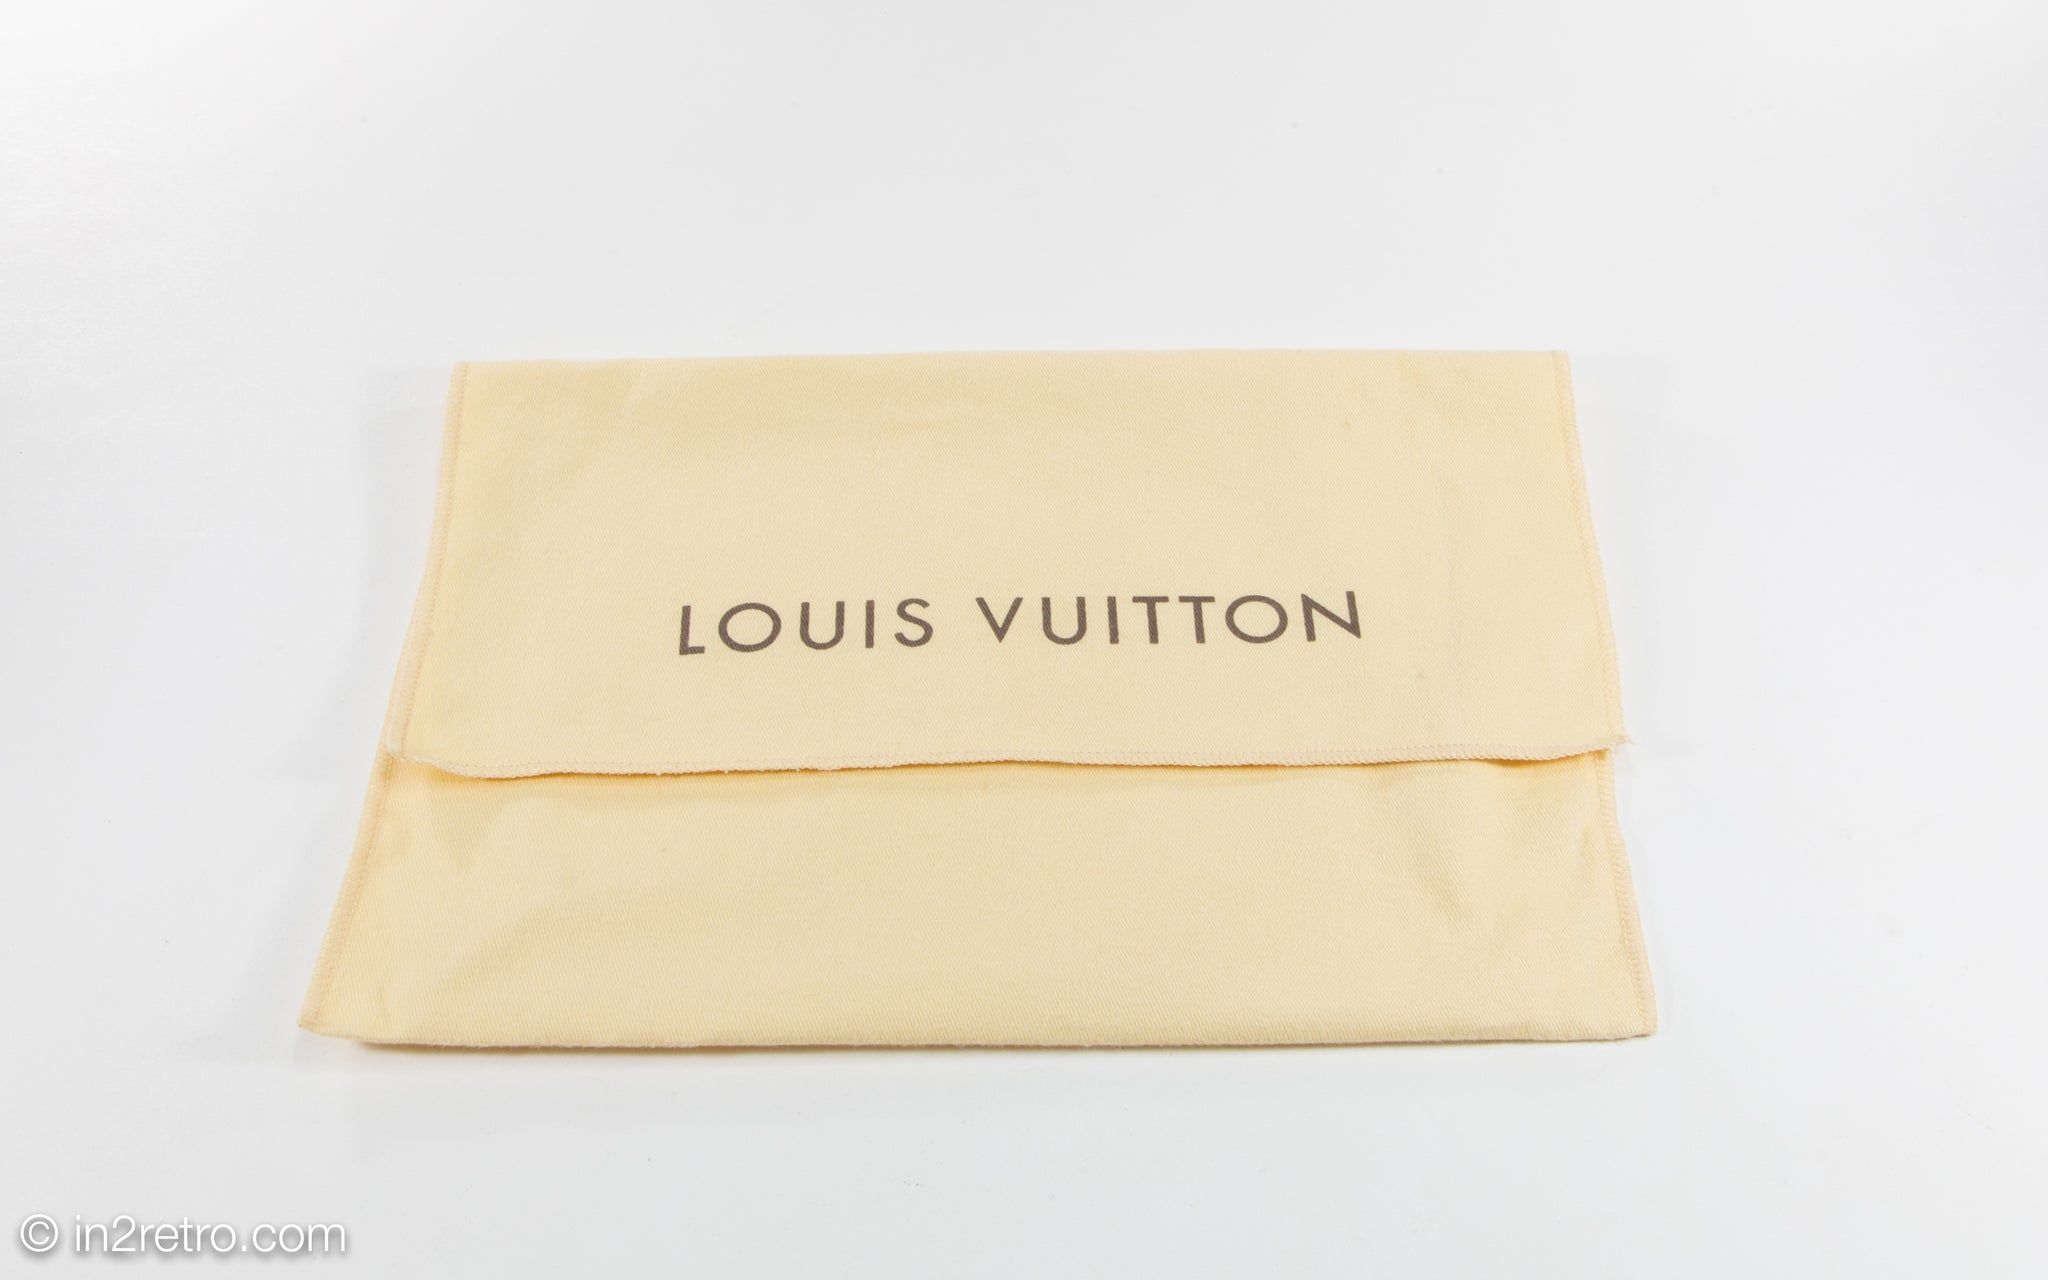 Authentic Louis Vuitton Box and Bag  Vuitton box, Louis vuitton, Vuitton